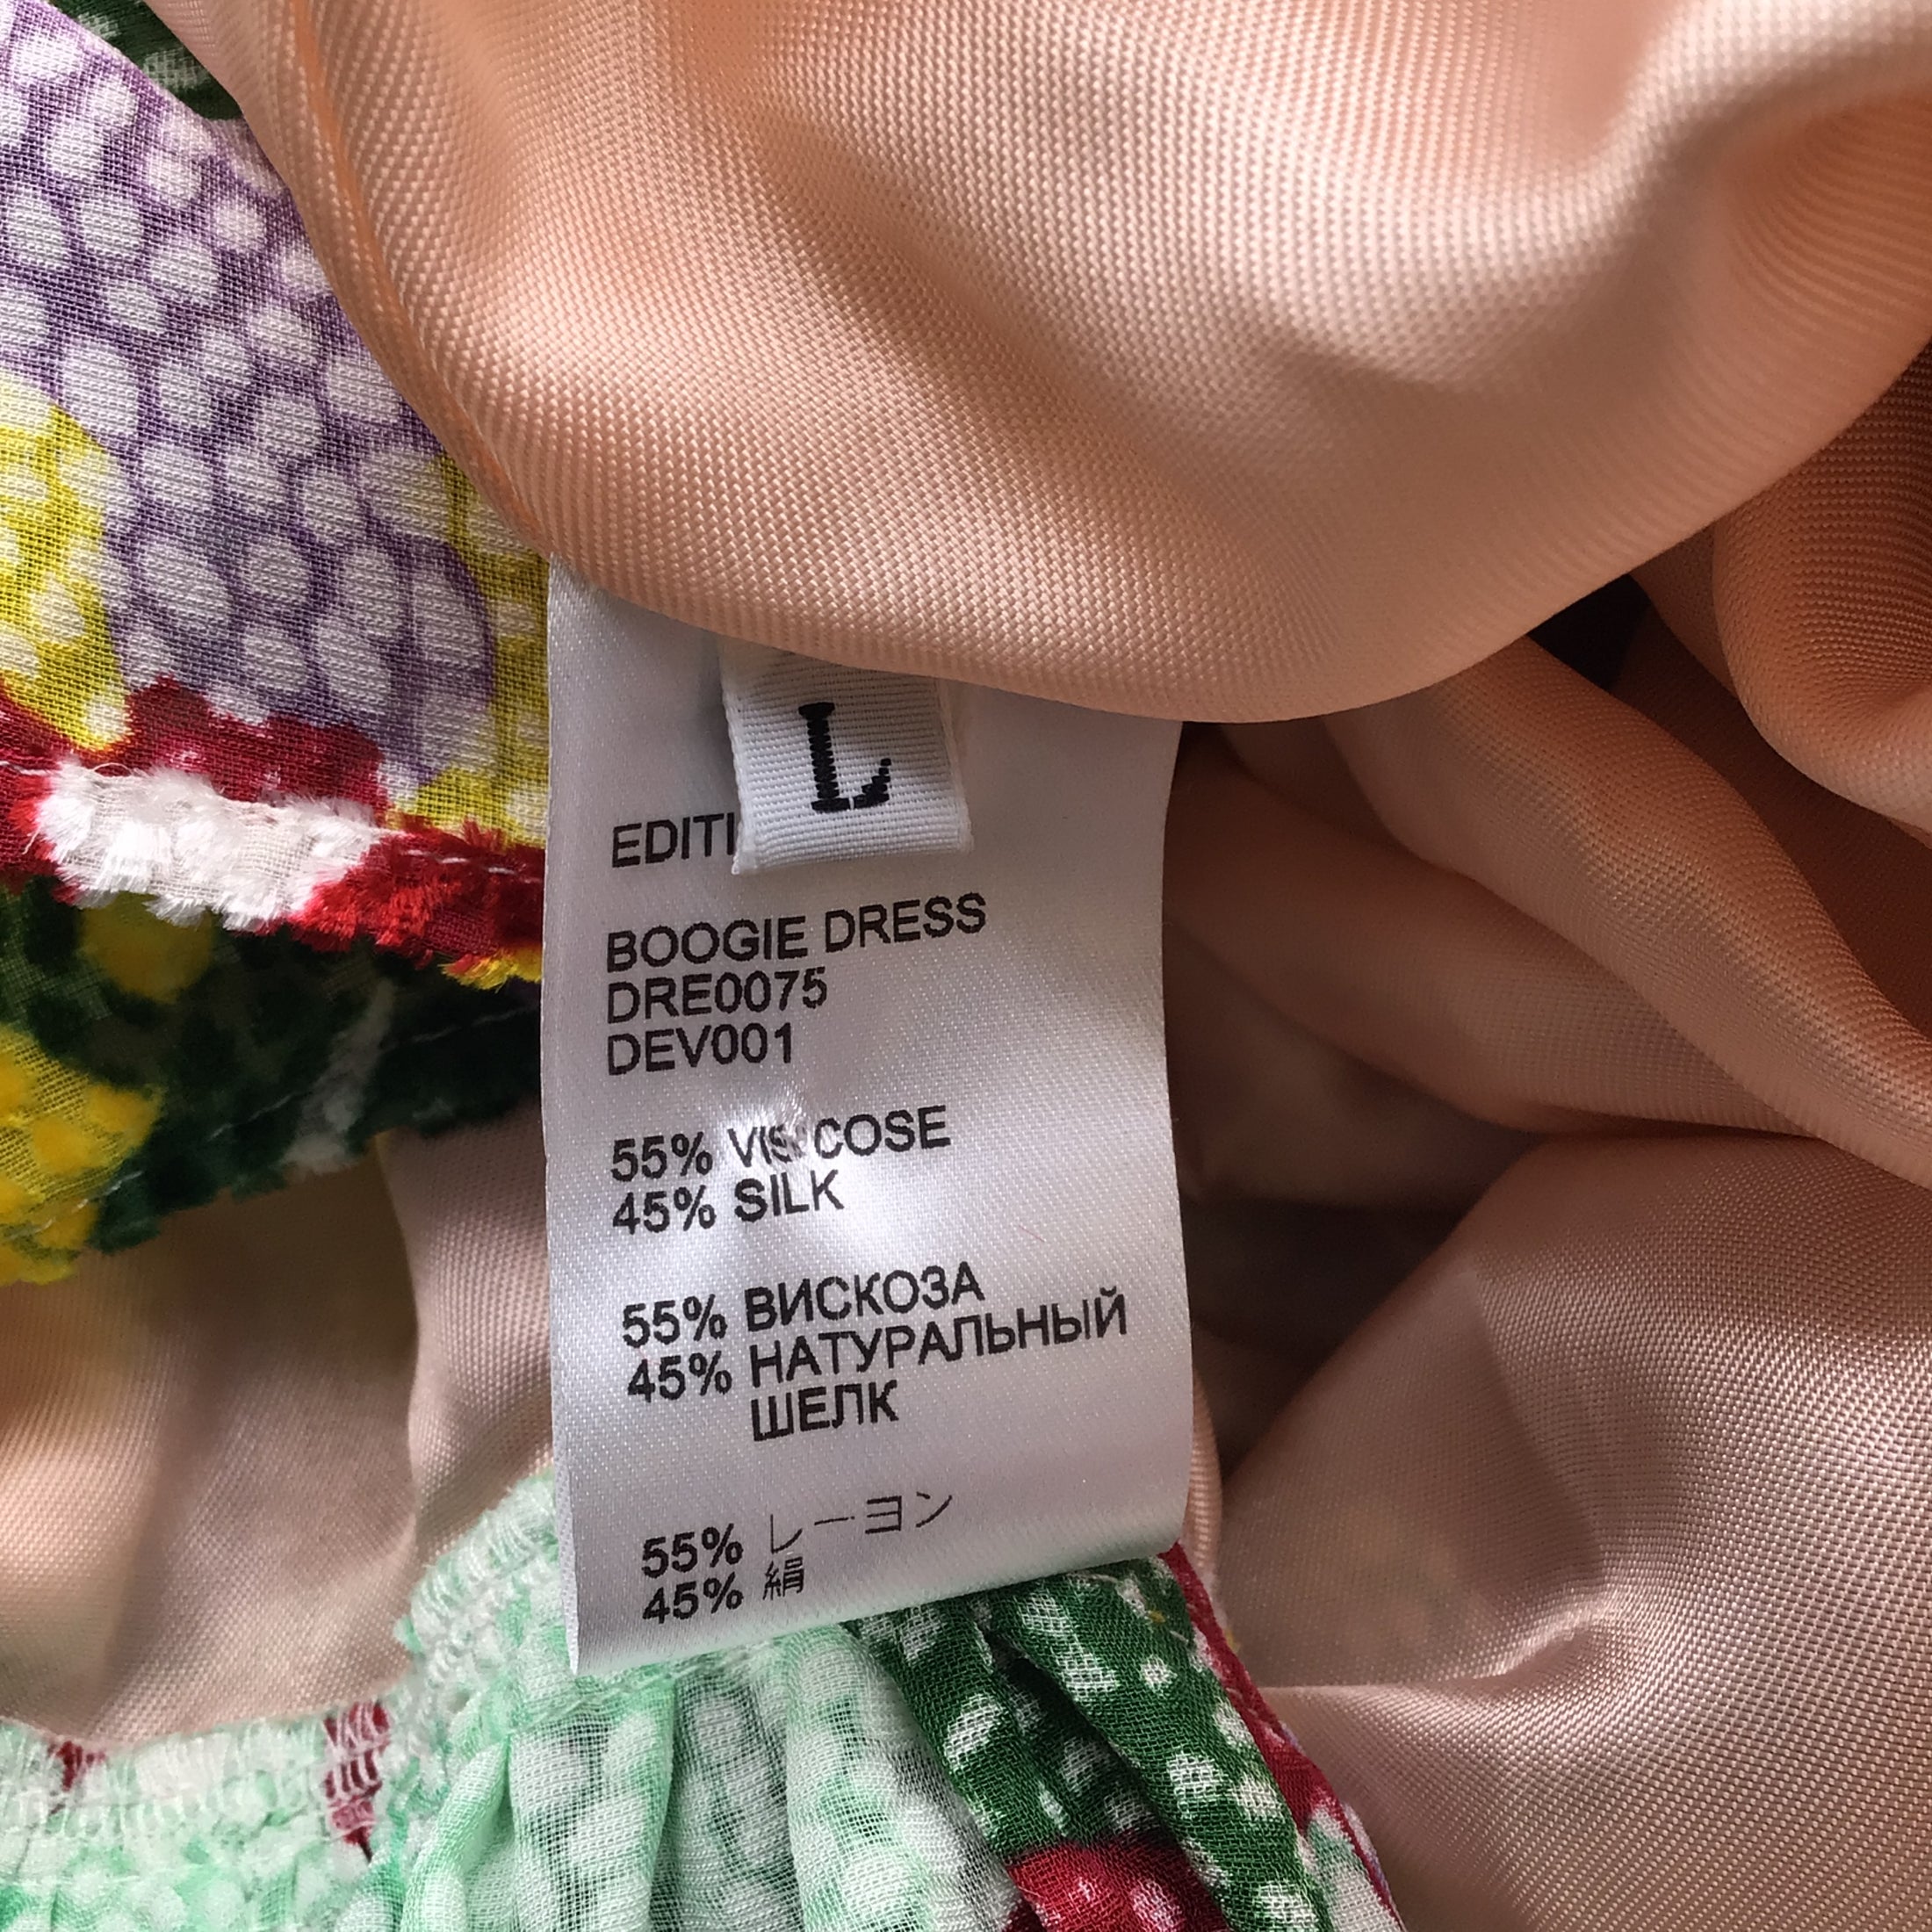 La DoubleJ Multicolor Meraviglia Print One Shoulder Velvet Boogie Dress